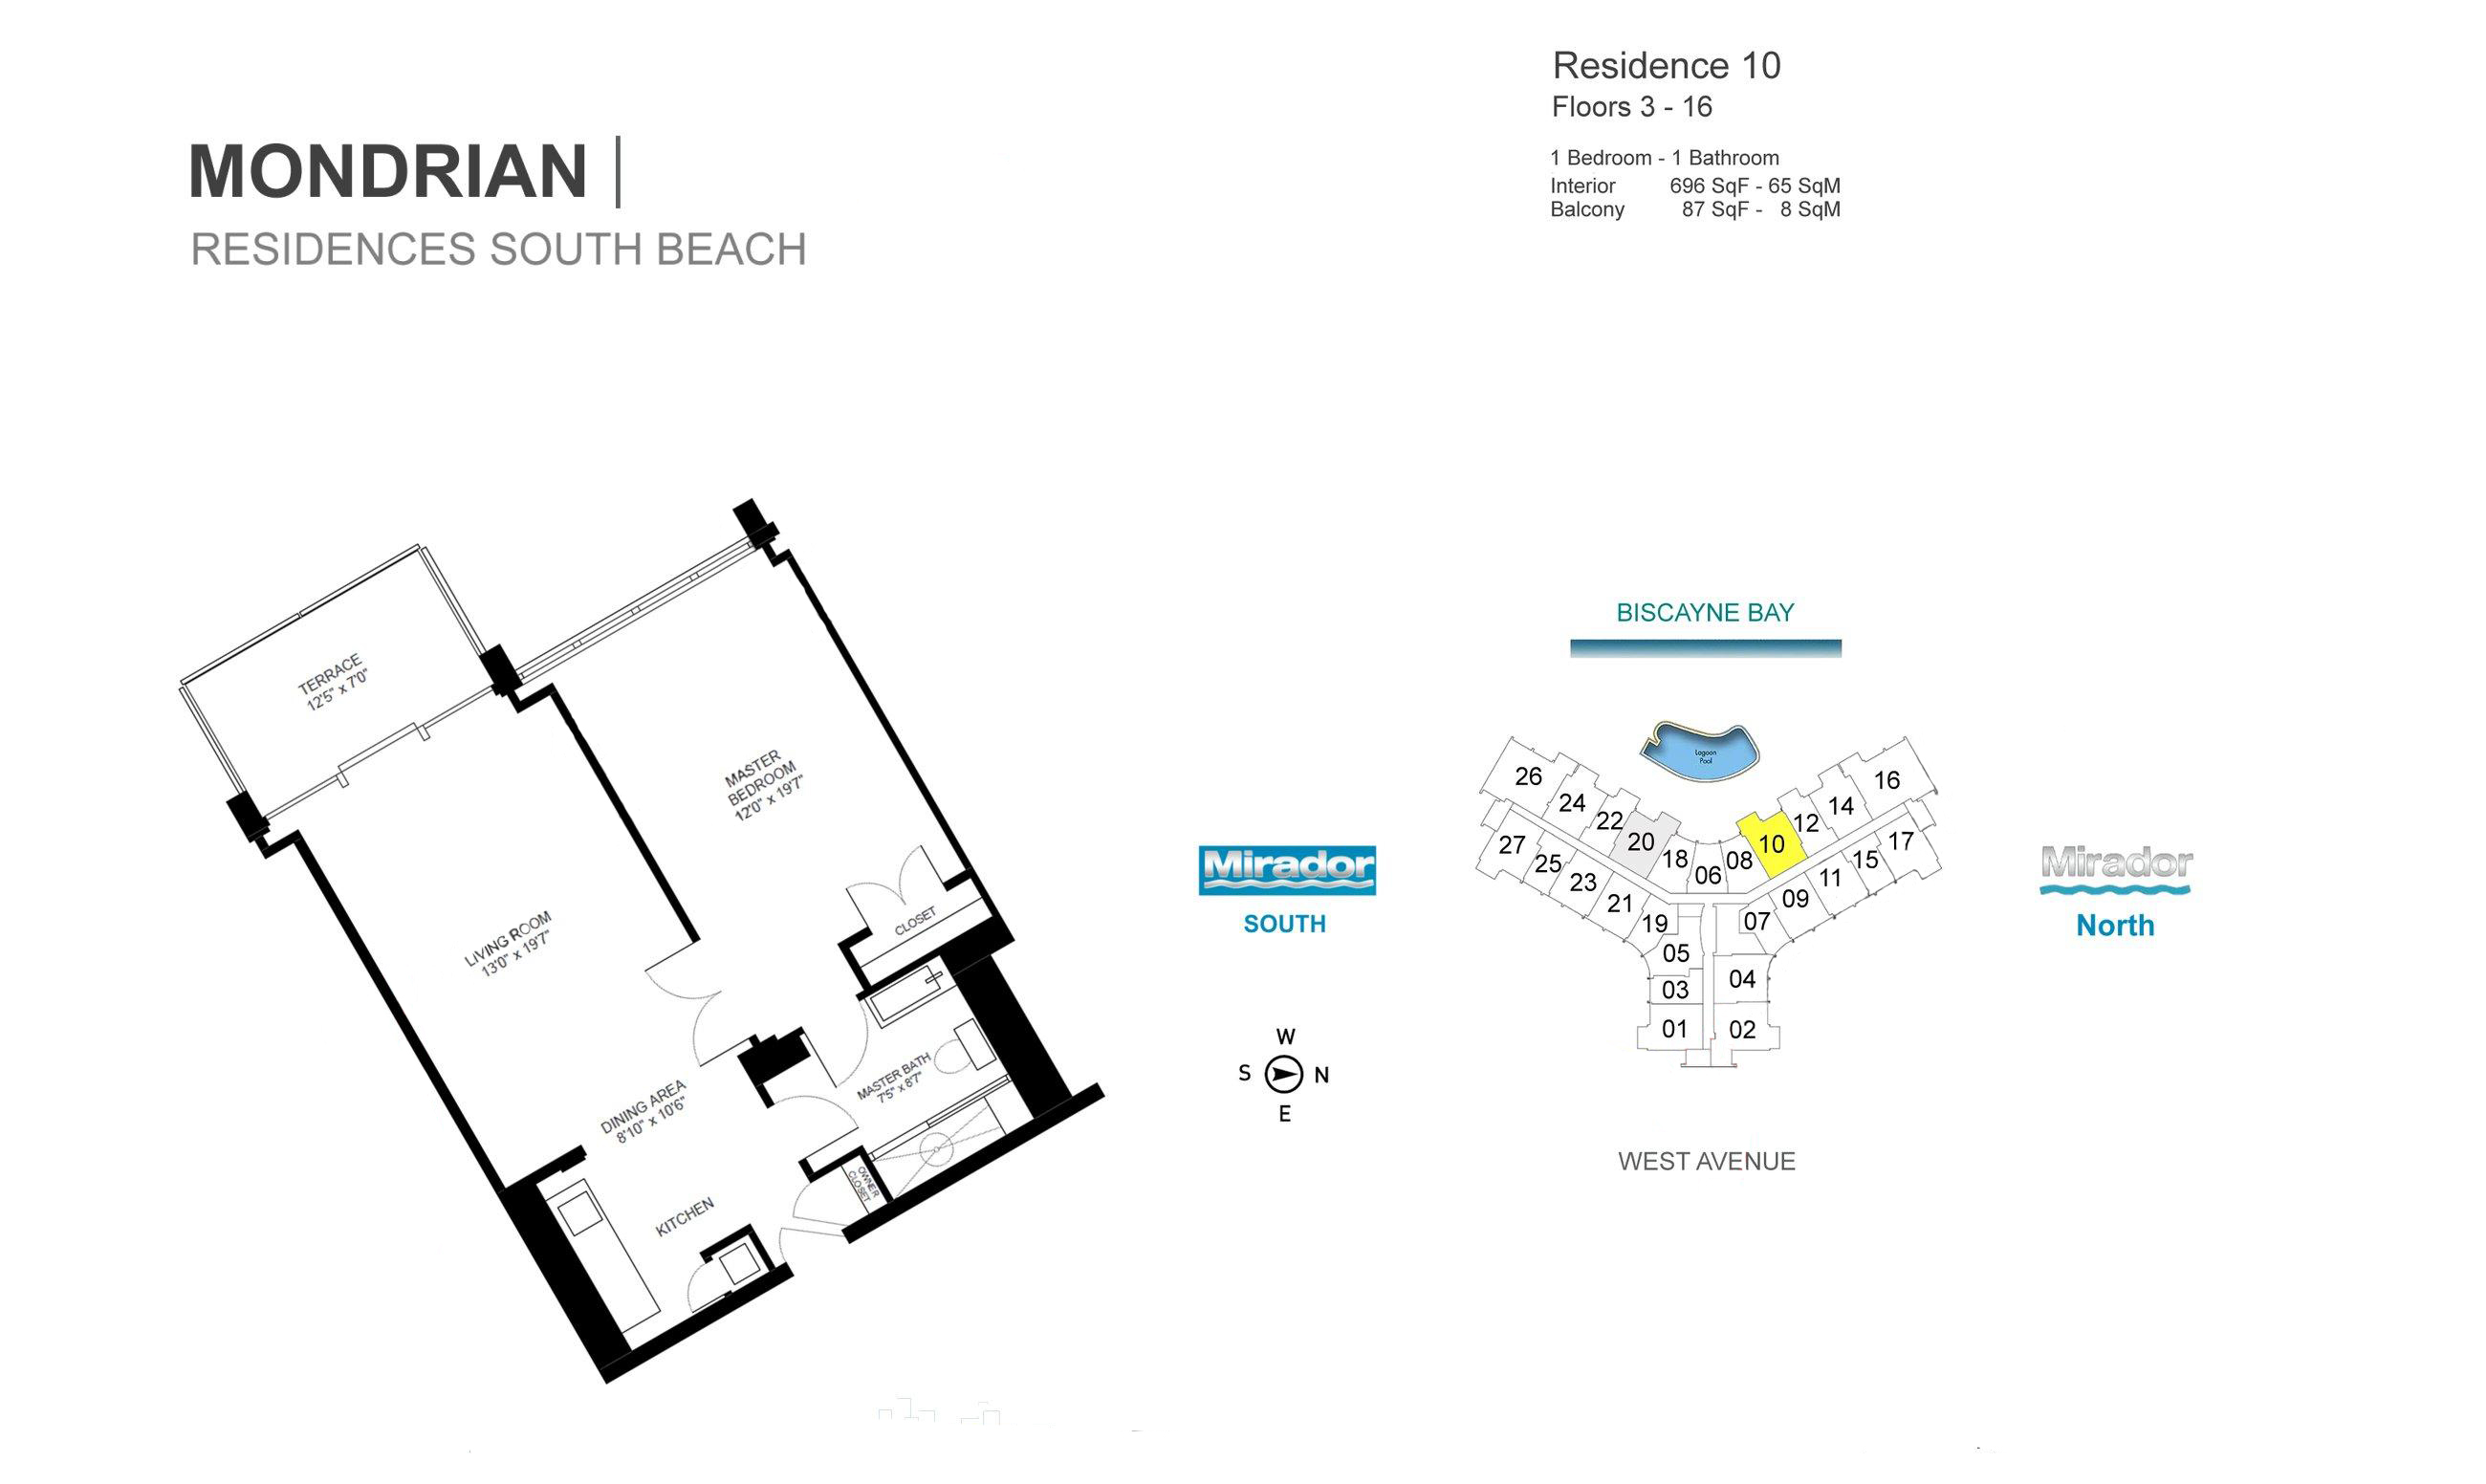 Mondrian South Beach Residence 10